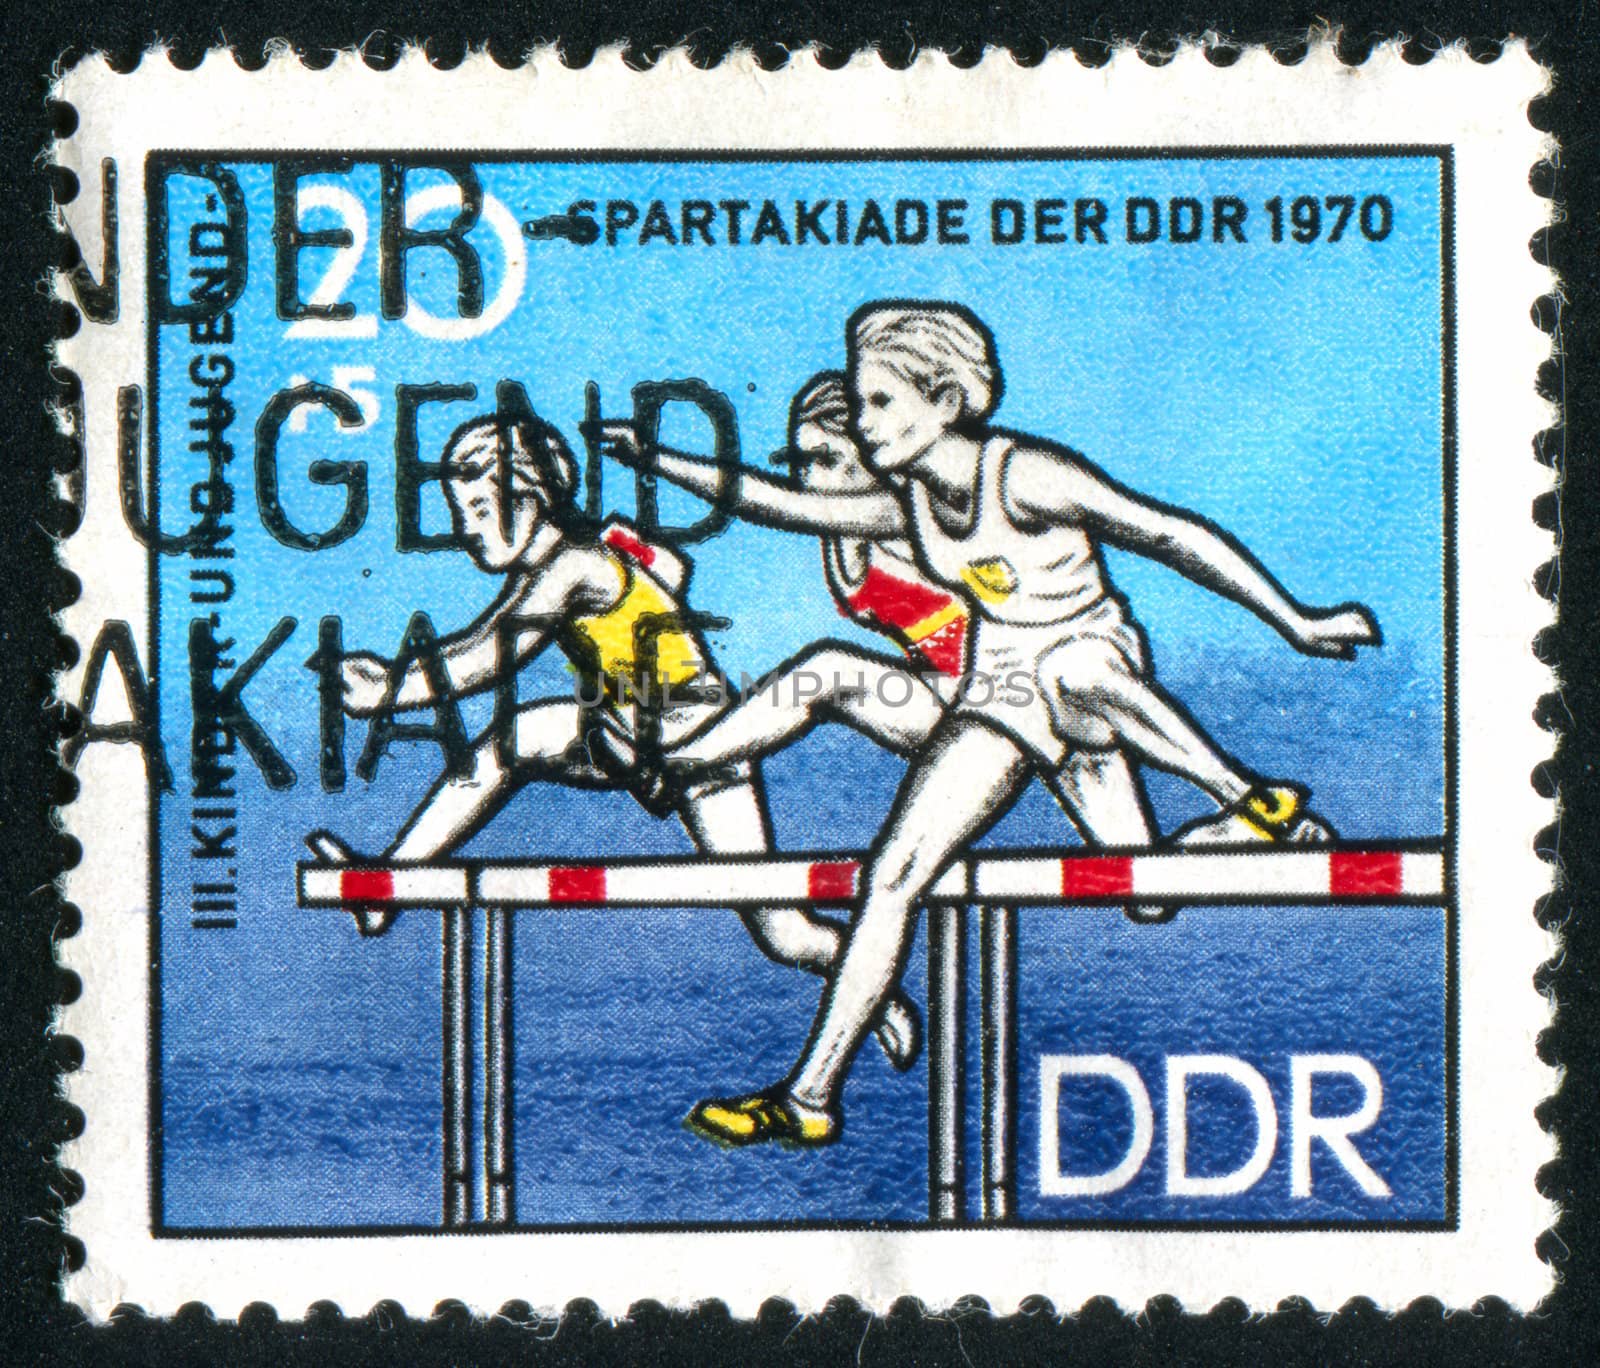 GERMANY - CIRCA 1970: stamp printed by Germany, shows Hurdle-race, circa 1970